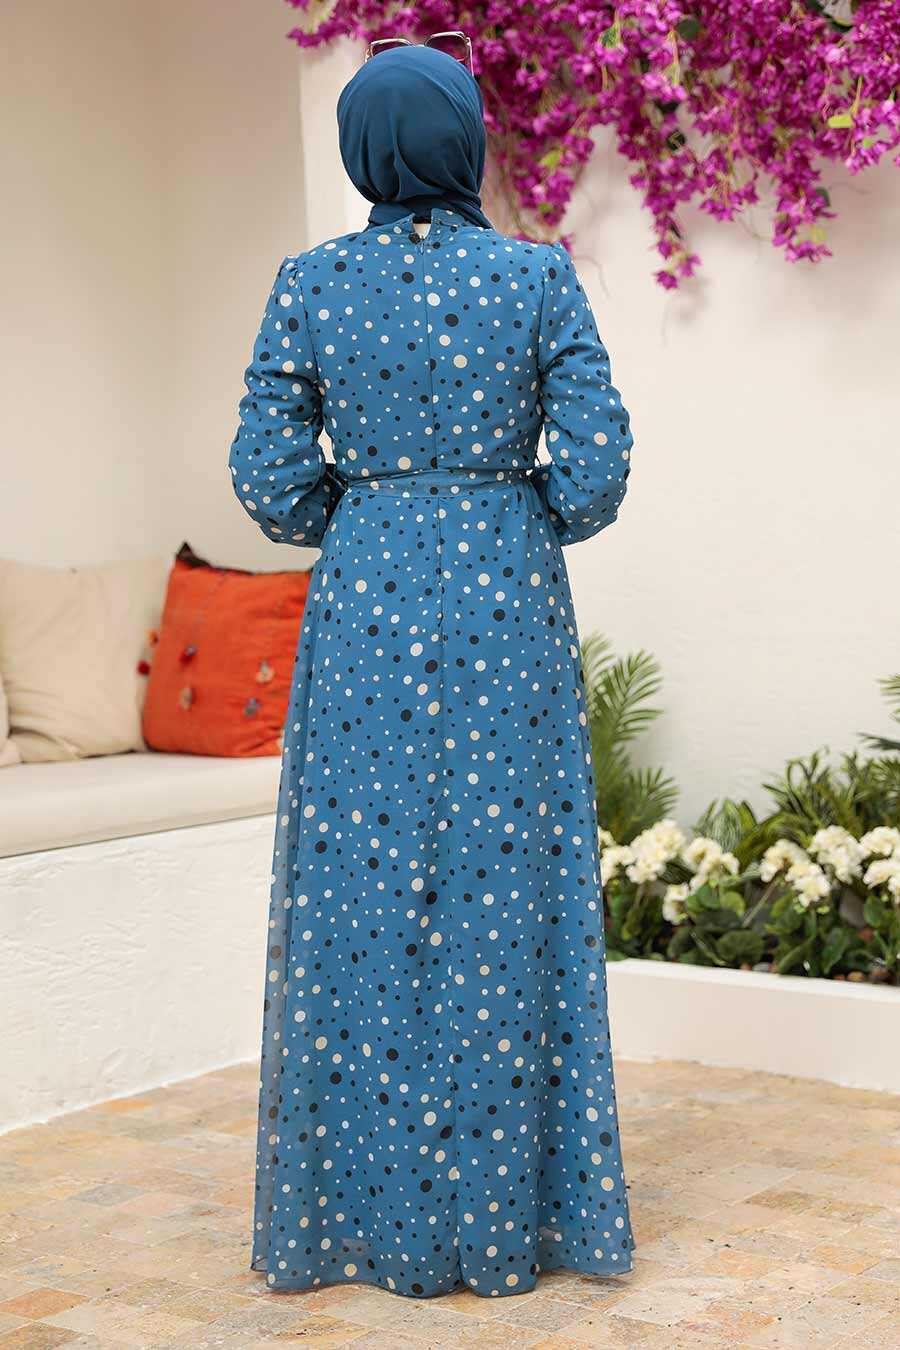 İndigo Blue Hijab Dress 279065IM